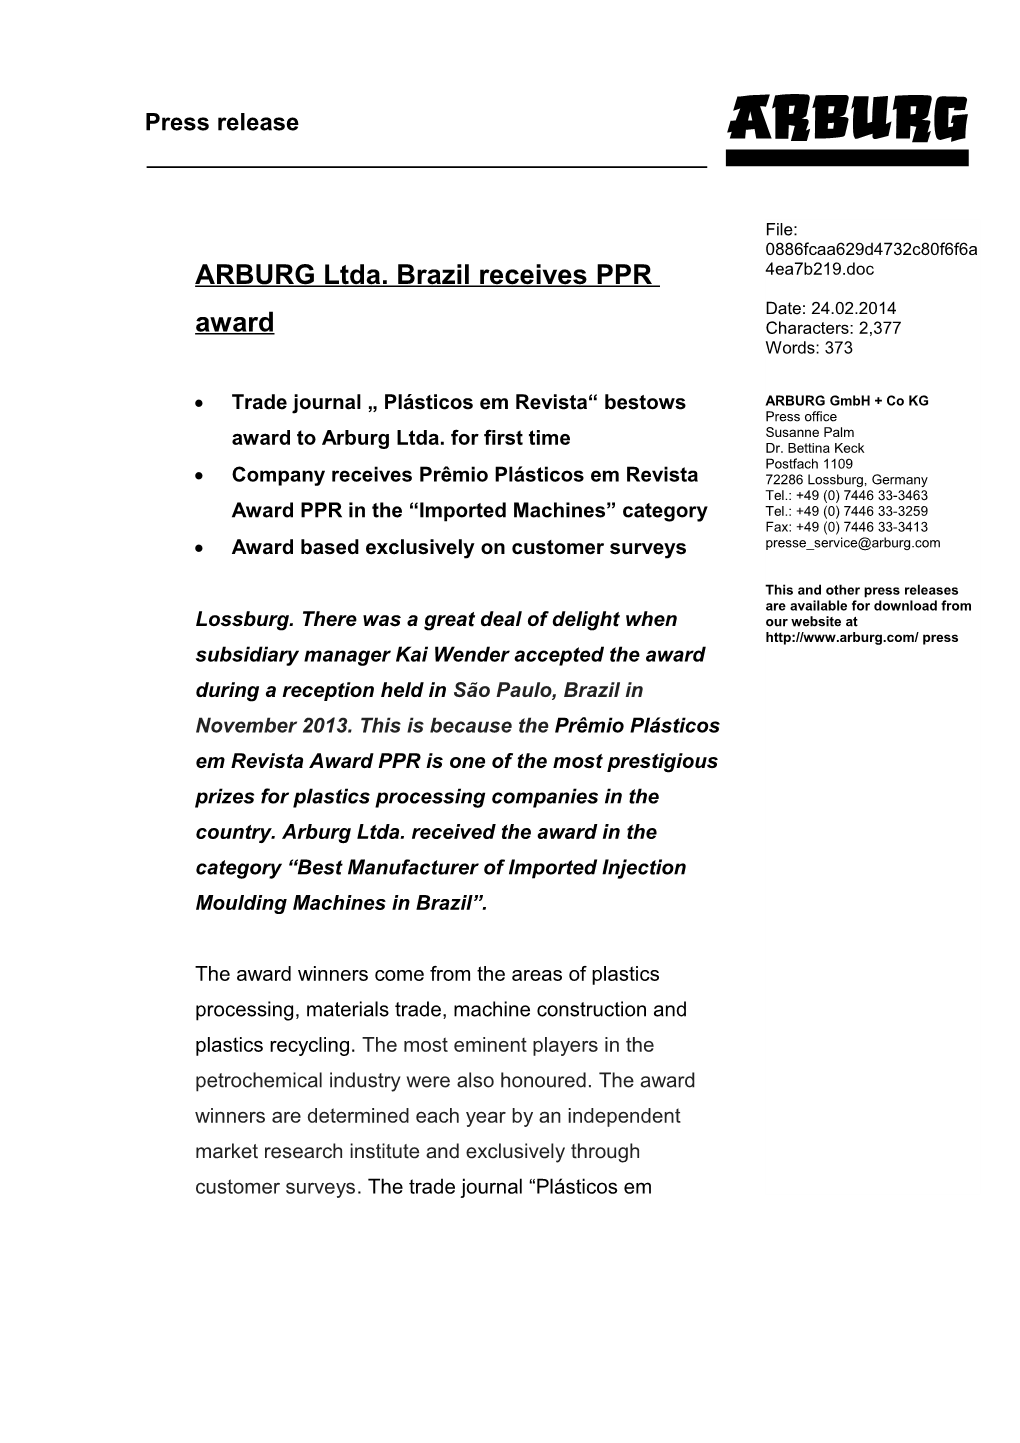 ARBURG Ltda. Brazil Receives PPR Award